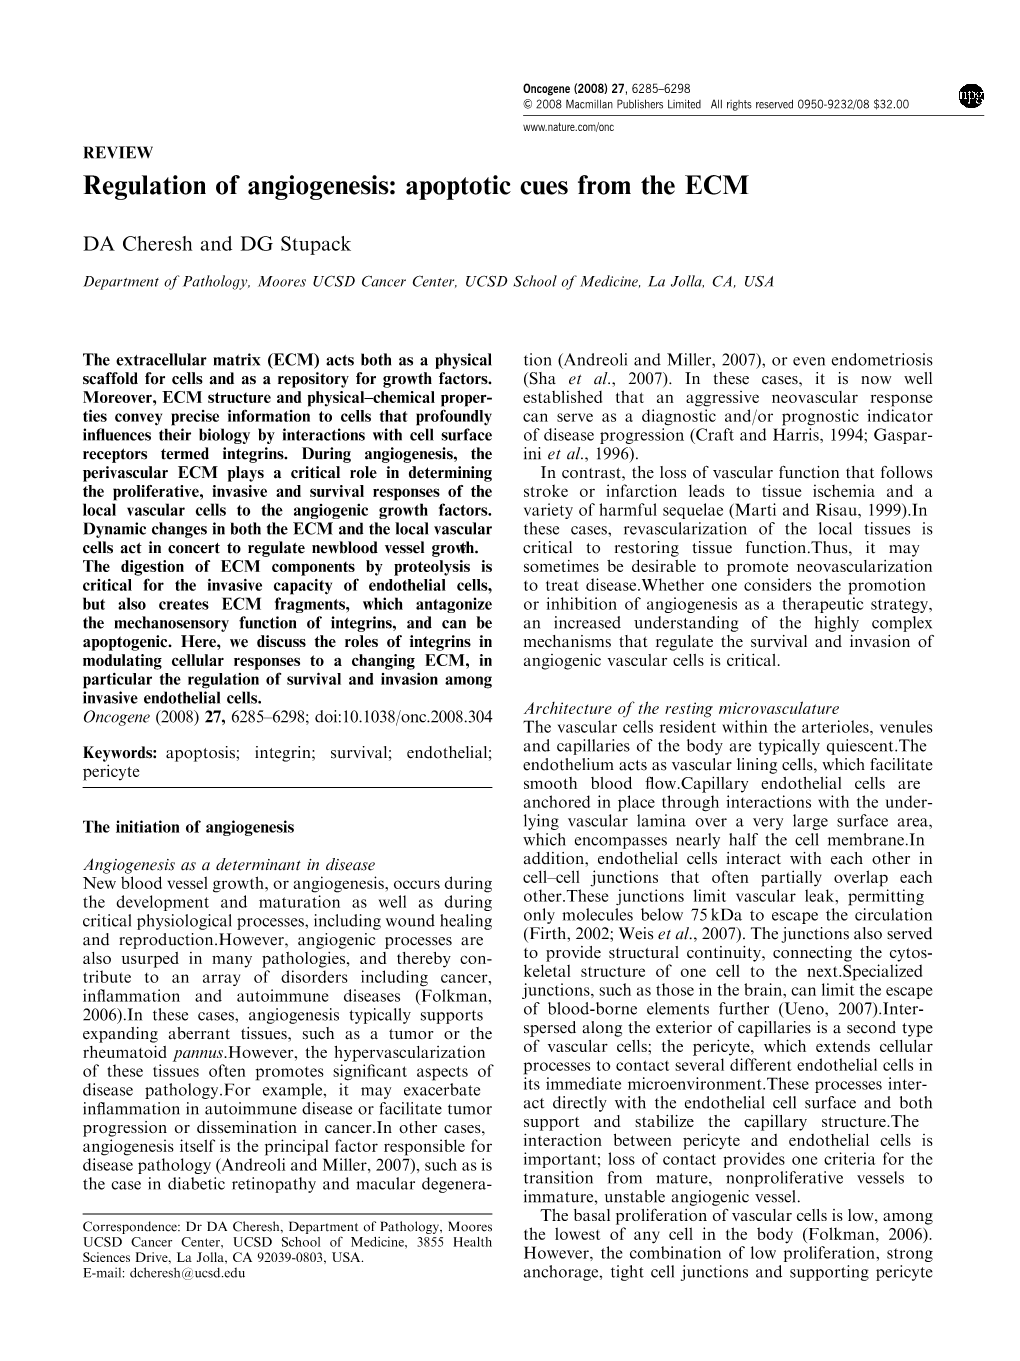 Regulation of Angiogenesis: Apoptotic Cues from the ECM